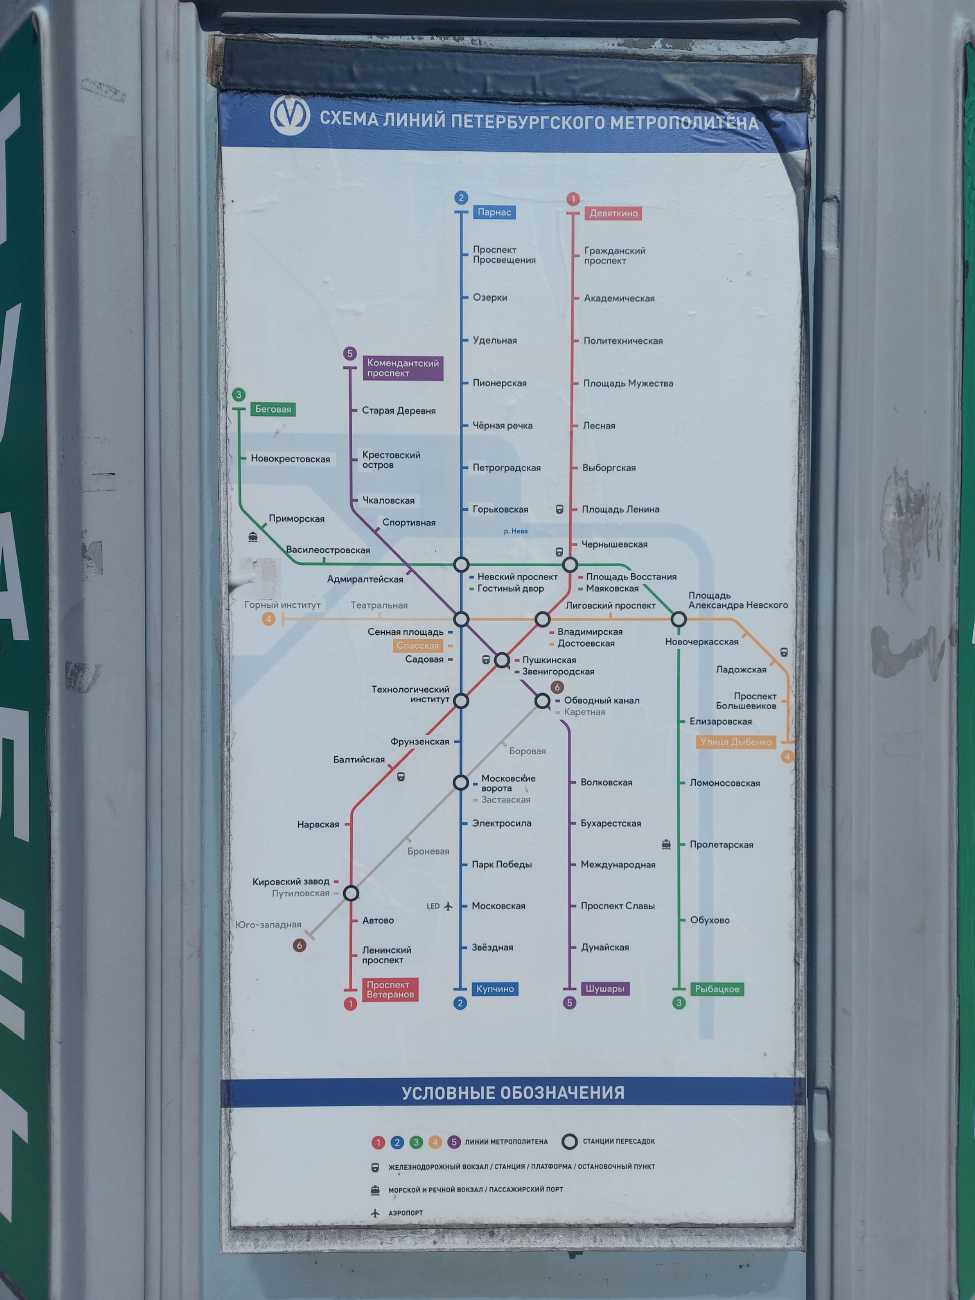 St Petersburg — Metro — Maps